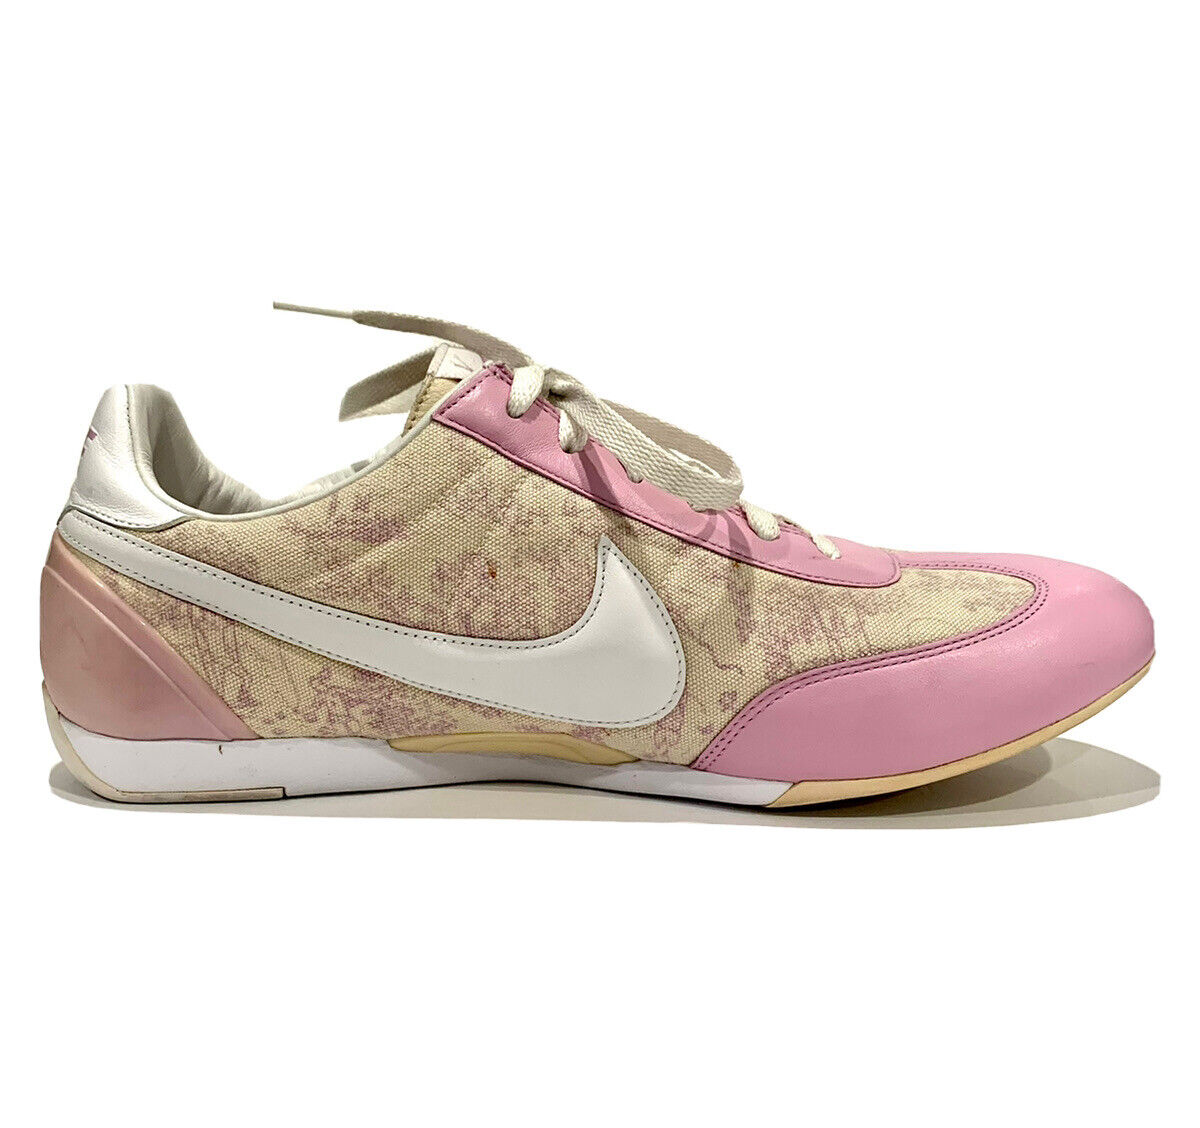 inhoudsopgave Boodschapper Mortal Nike Liberty Sprint Sister Lavender/Beige Sneakers Shoes Women's size 10.5  | eBay